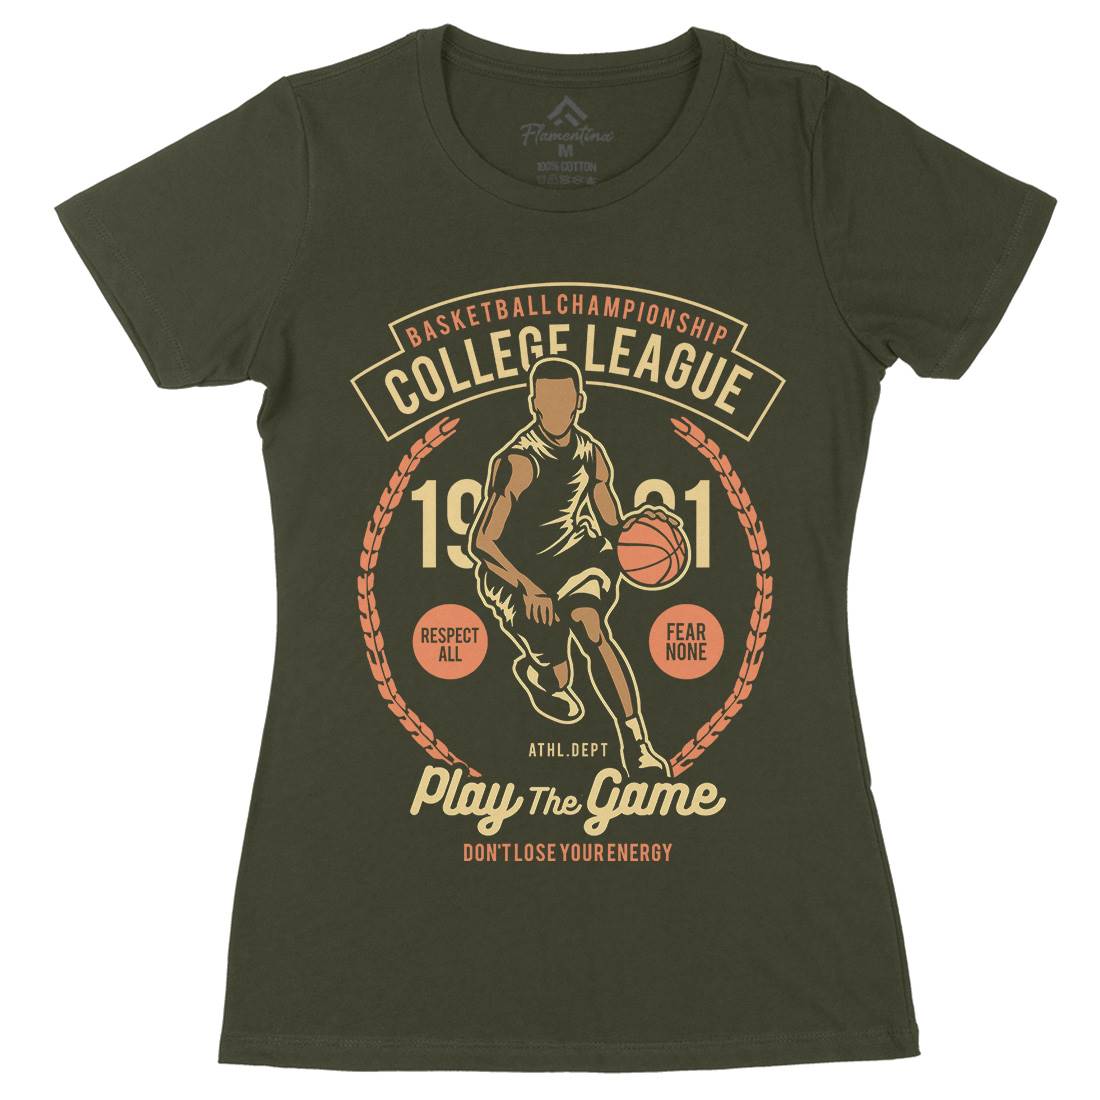 College League Womens Organic Crew Neck T-Shirt Sport B197